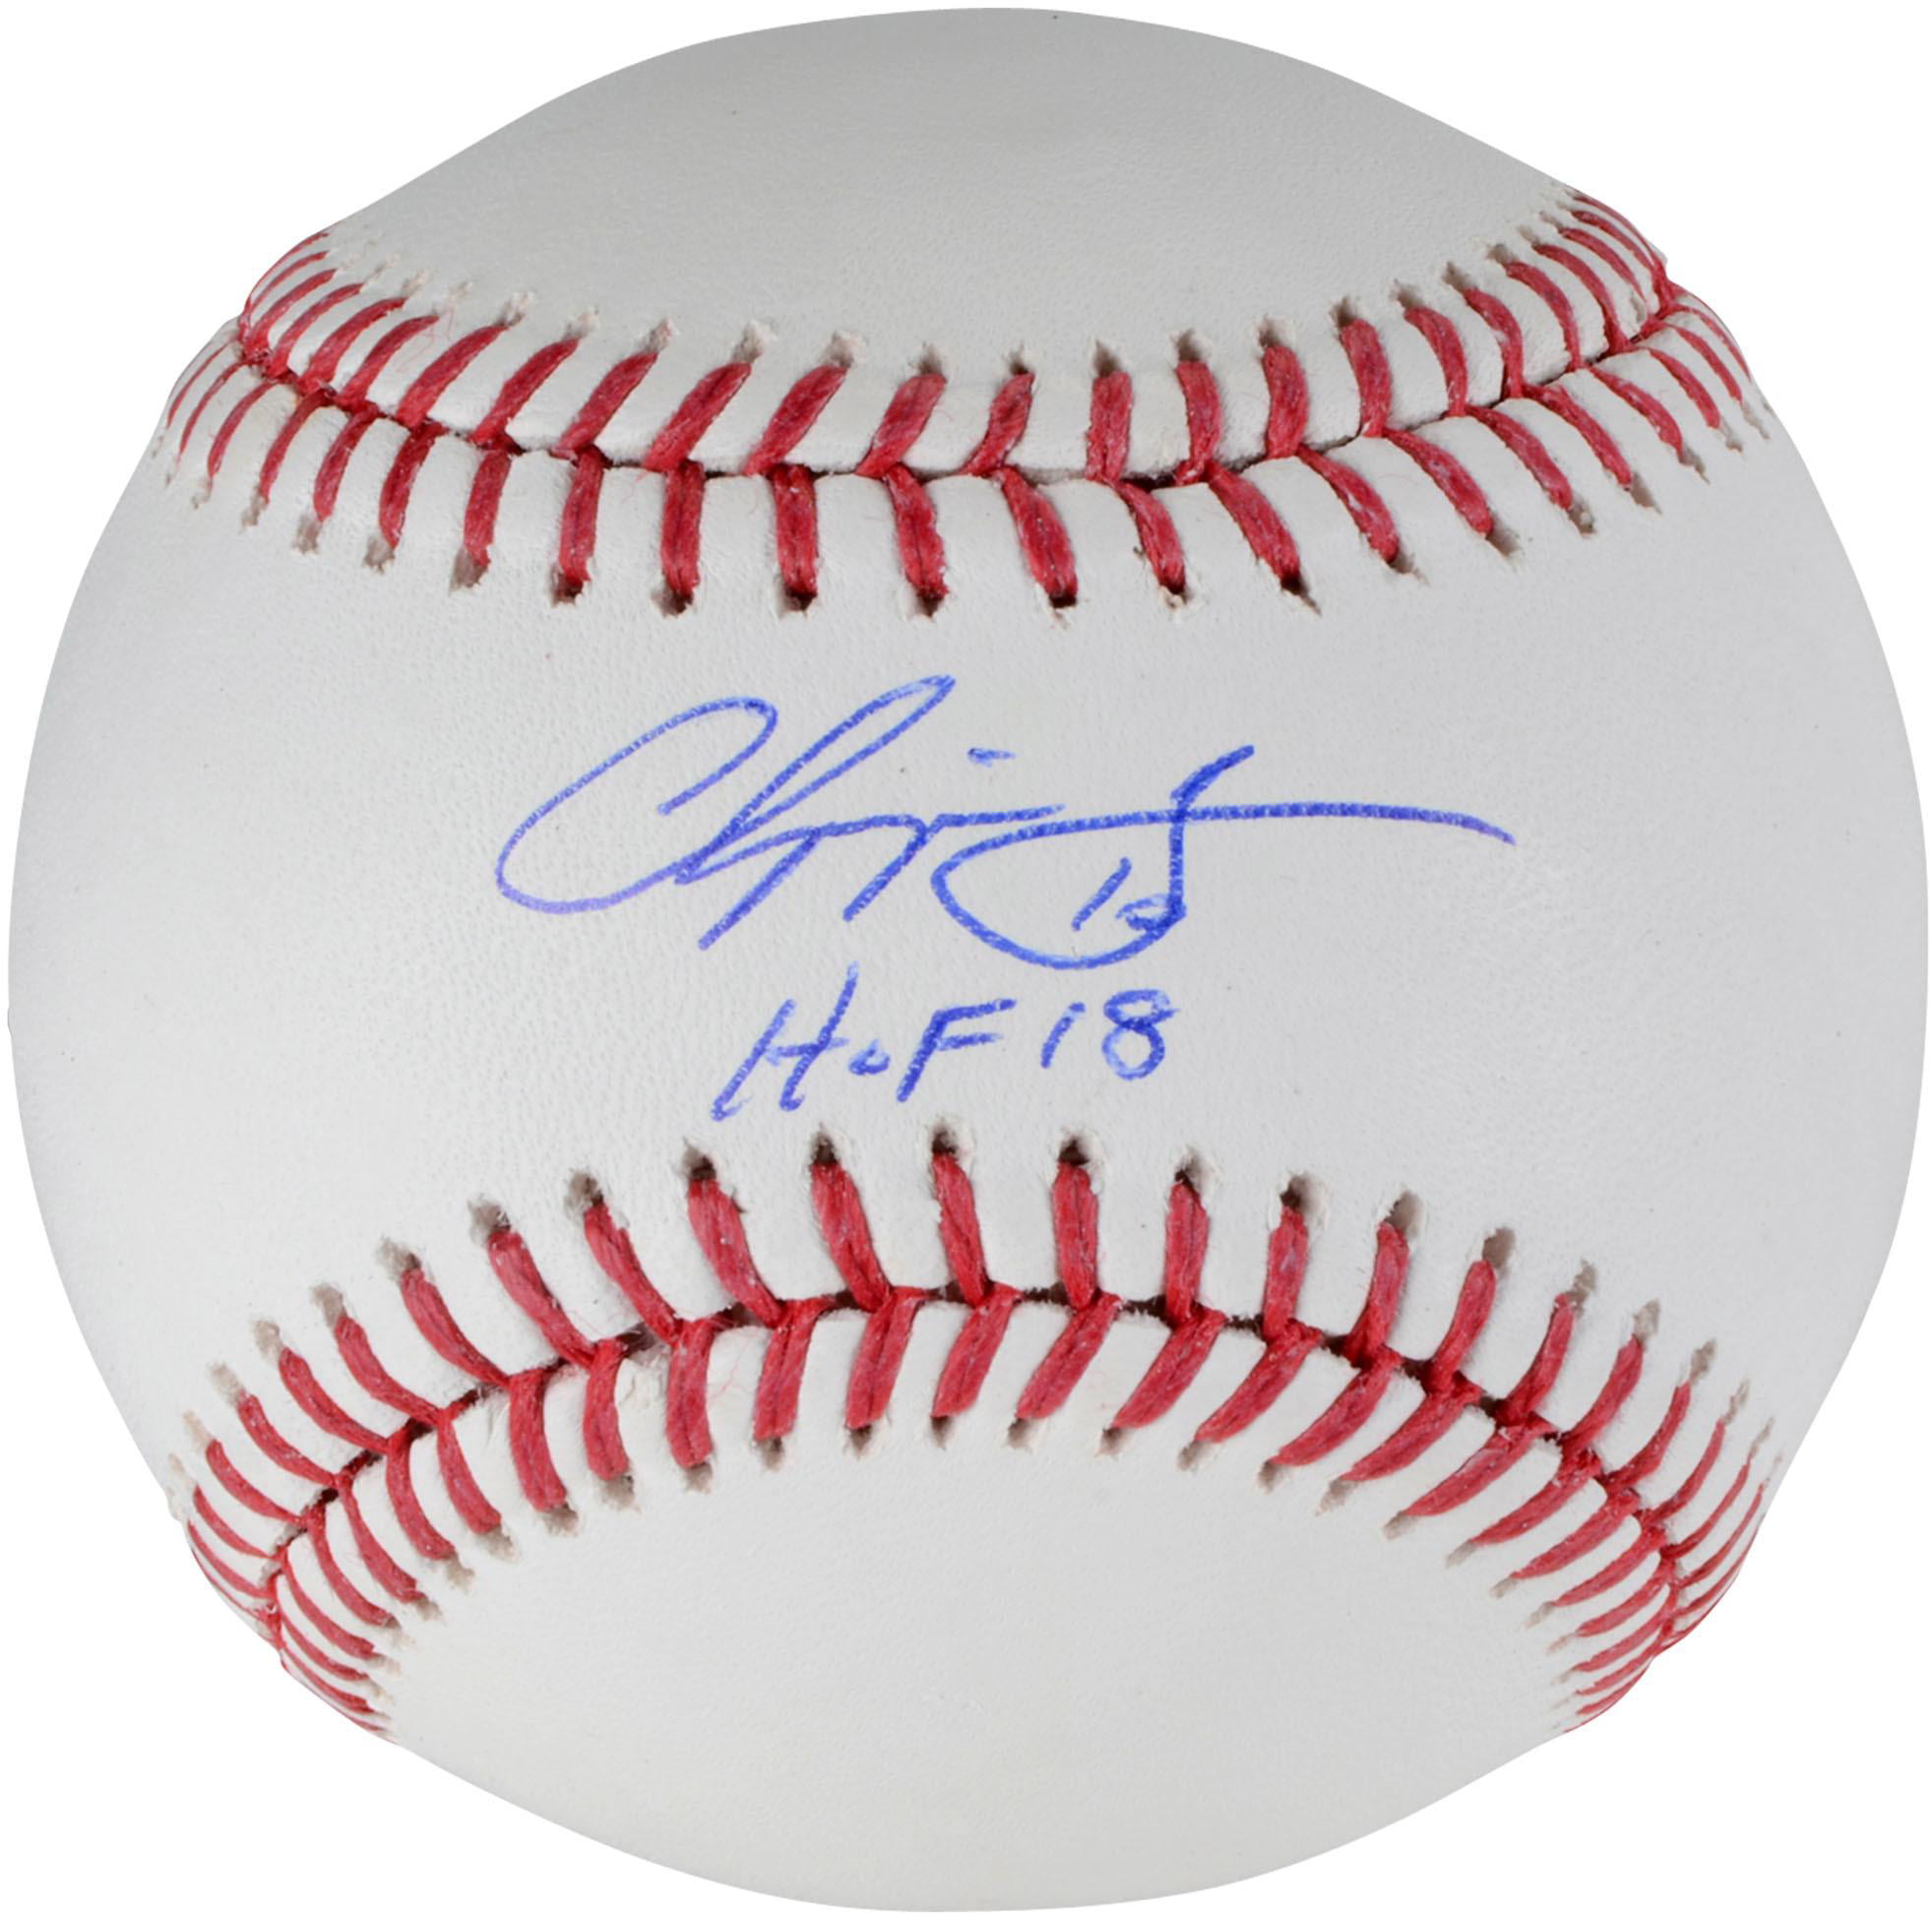 chipper jones autographed baseball